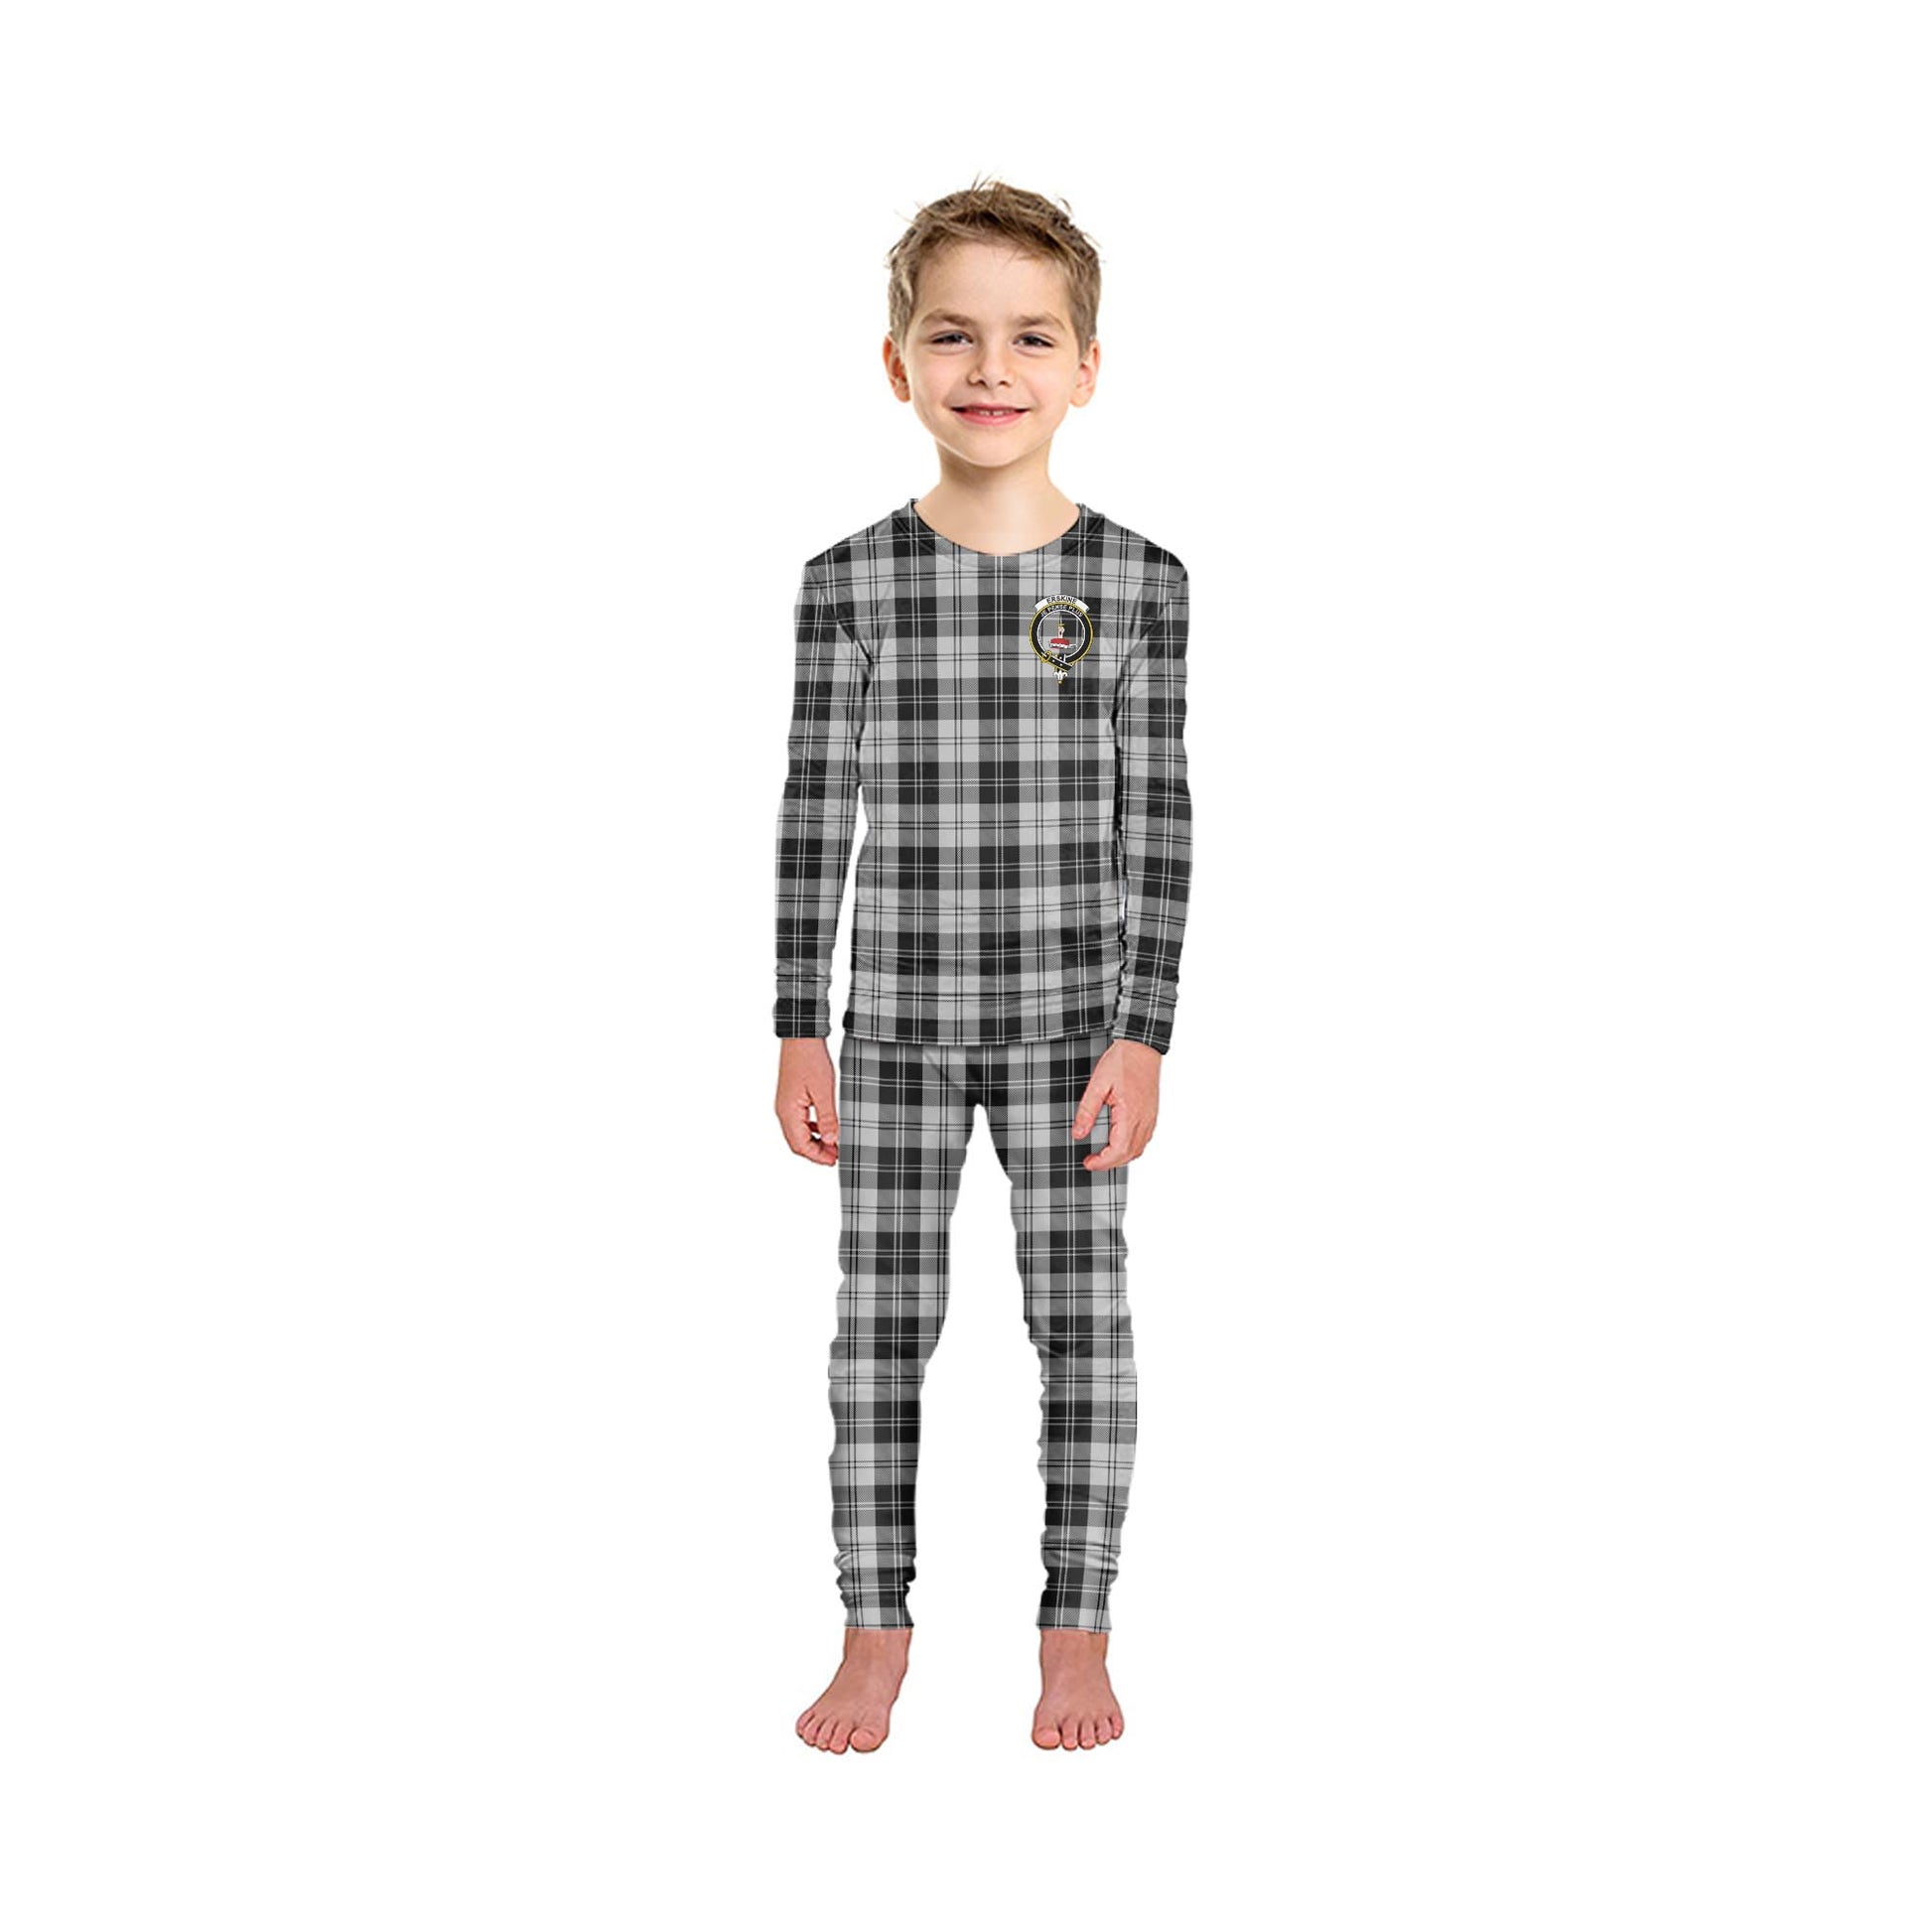 Erskine Black and White Tartan Pajamas Family Set with Family Crest - Tartanvibesclothing